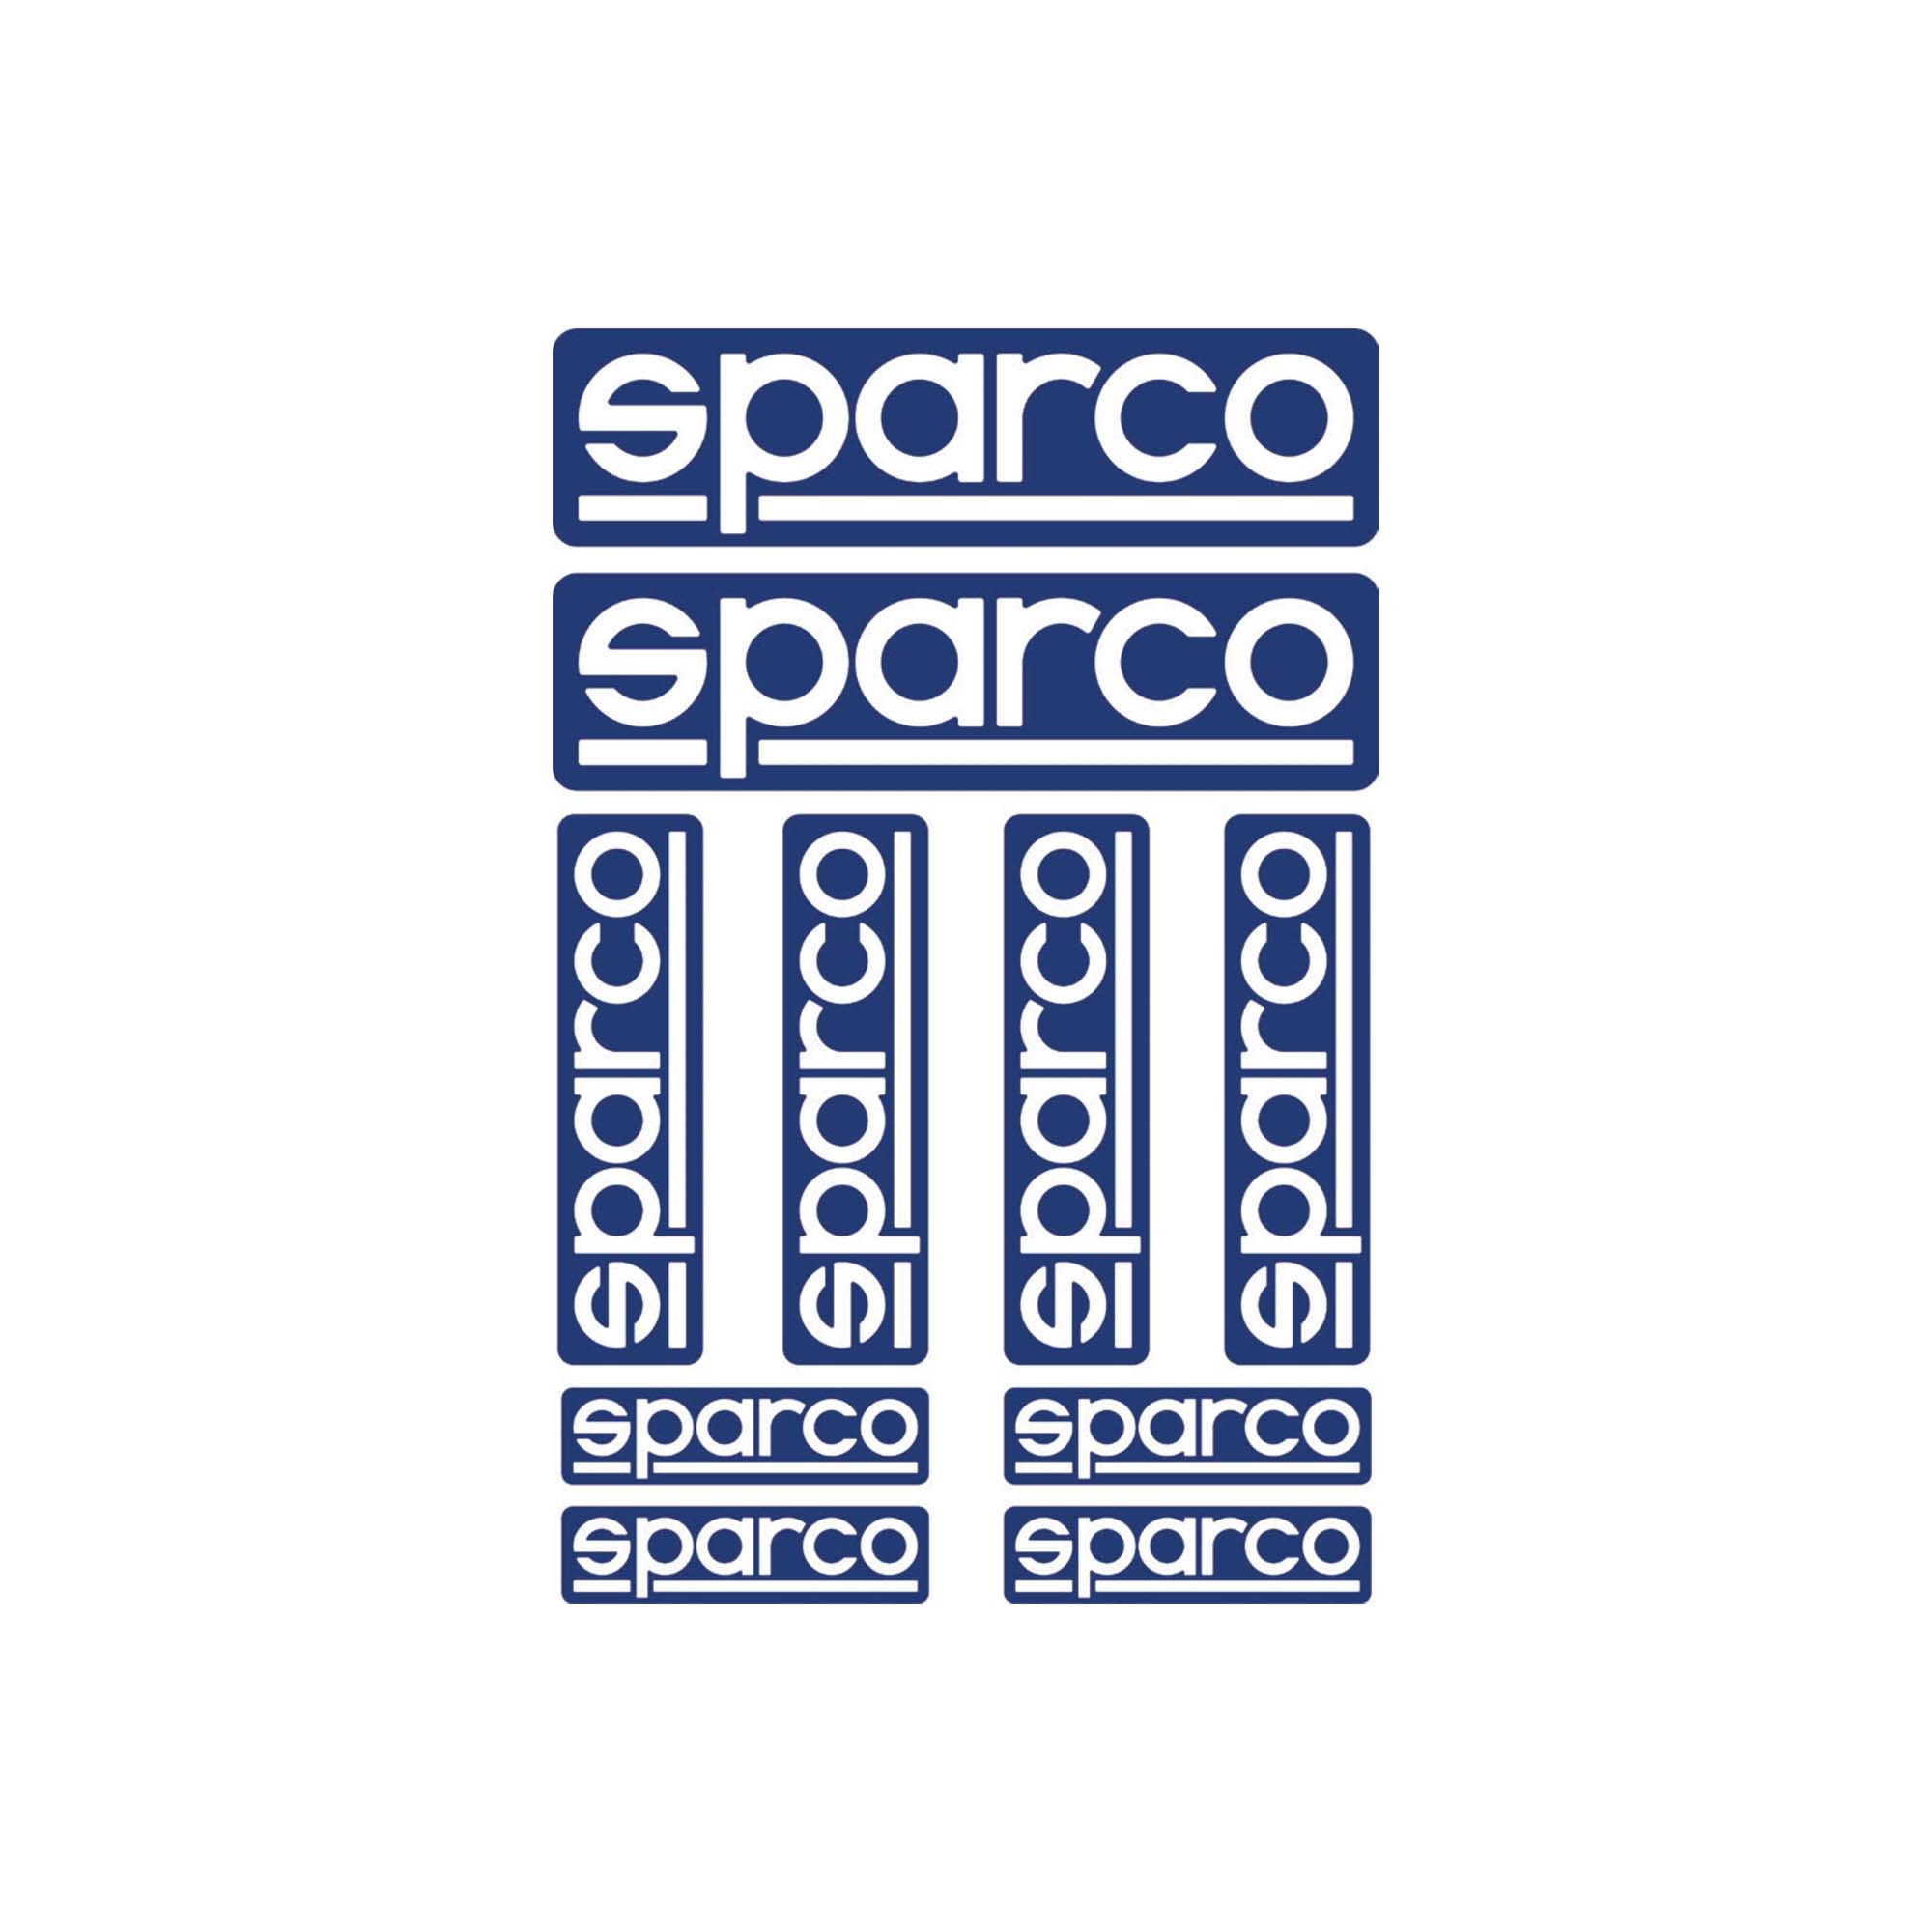 Sparco Sticker Set (10 Pieces)